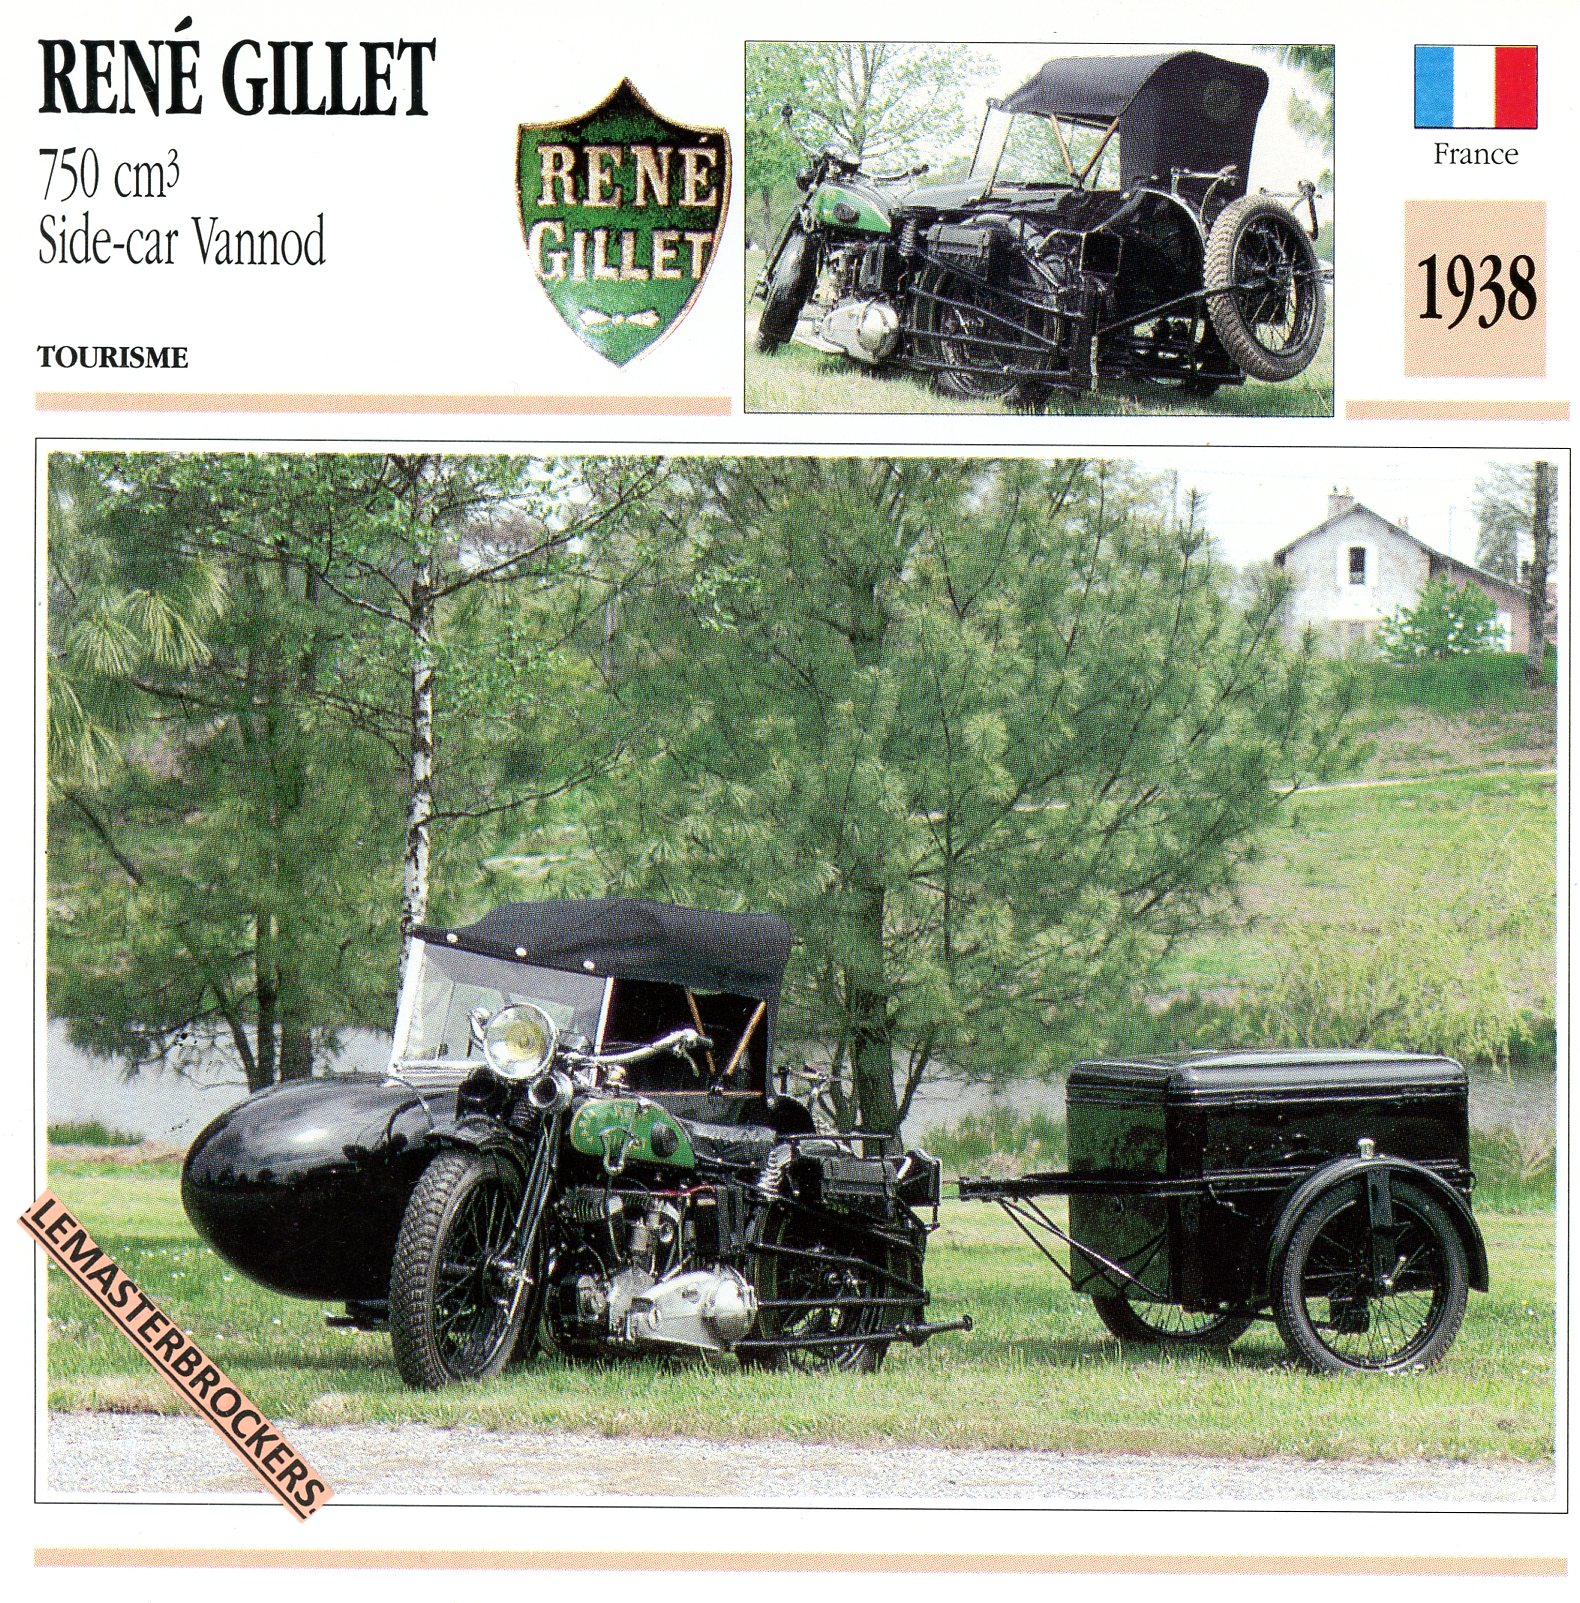 RENÉ-GILLET-SIDE-CAR-VANNOD-1938-FICHE-MOTO-LEMASTERBROCKERS-CARD-MOTORCYCLE